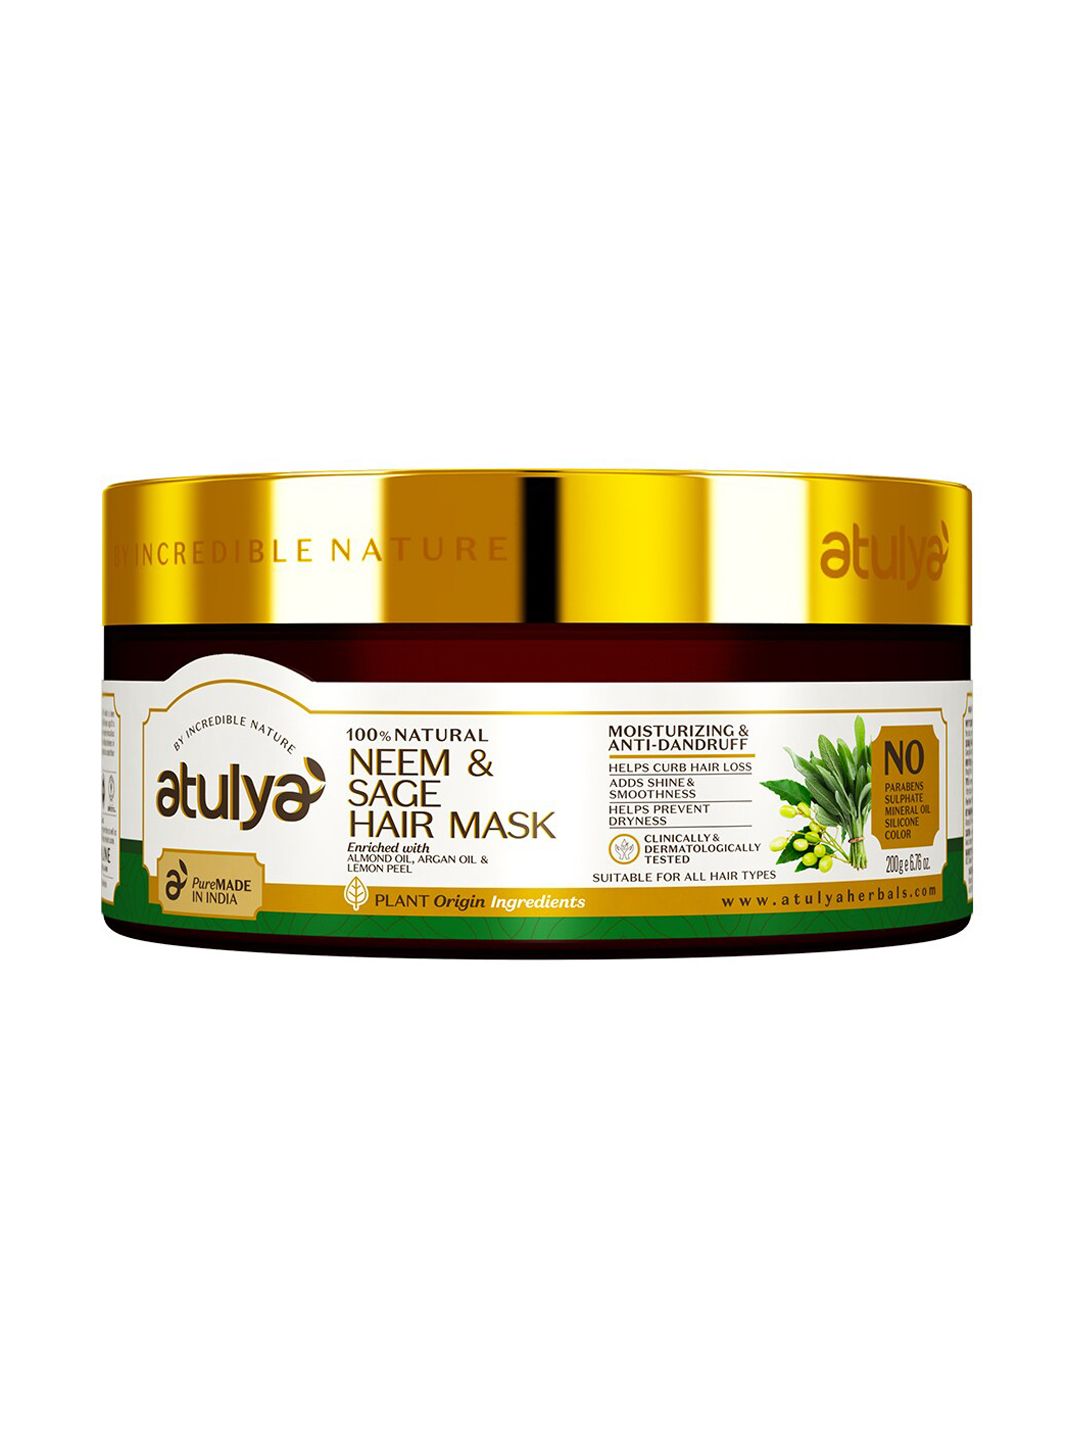 Atulya Natural Neem & Sage Hair Mask 200 g Price in India